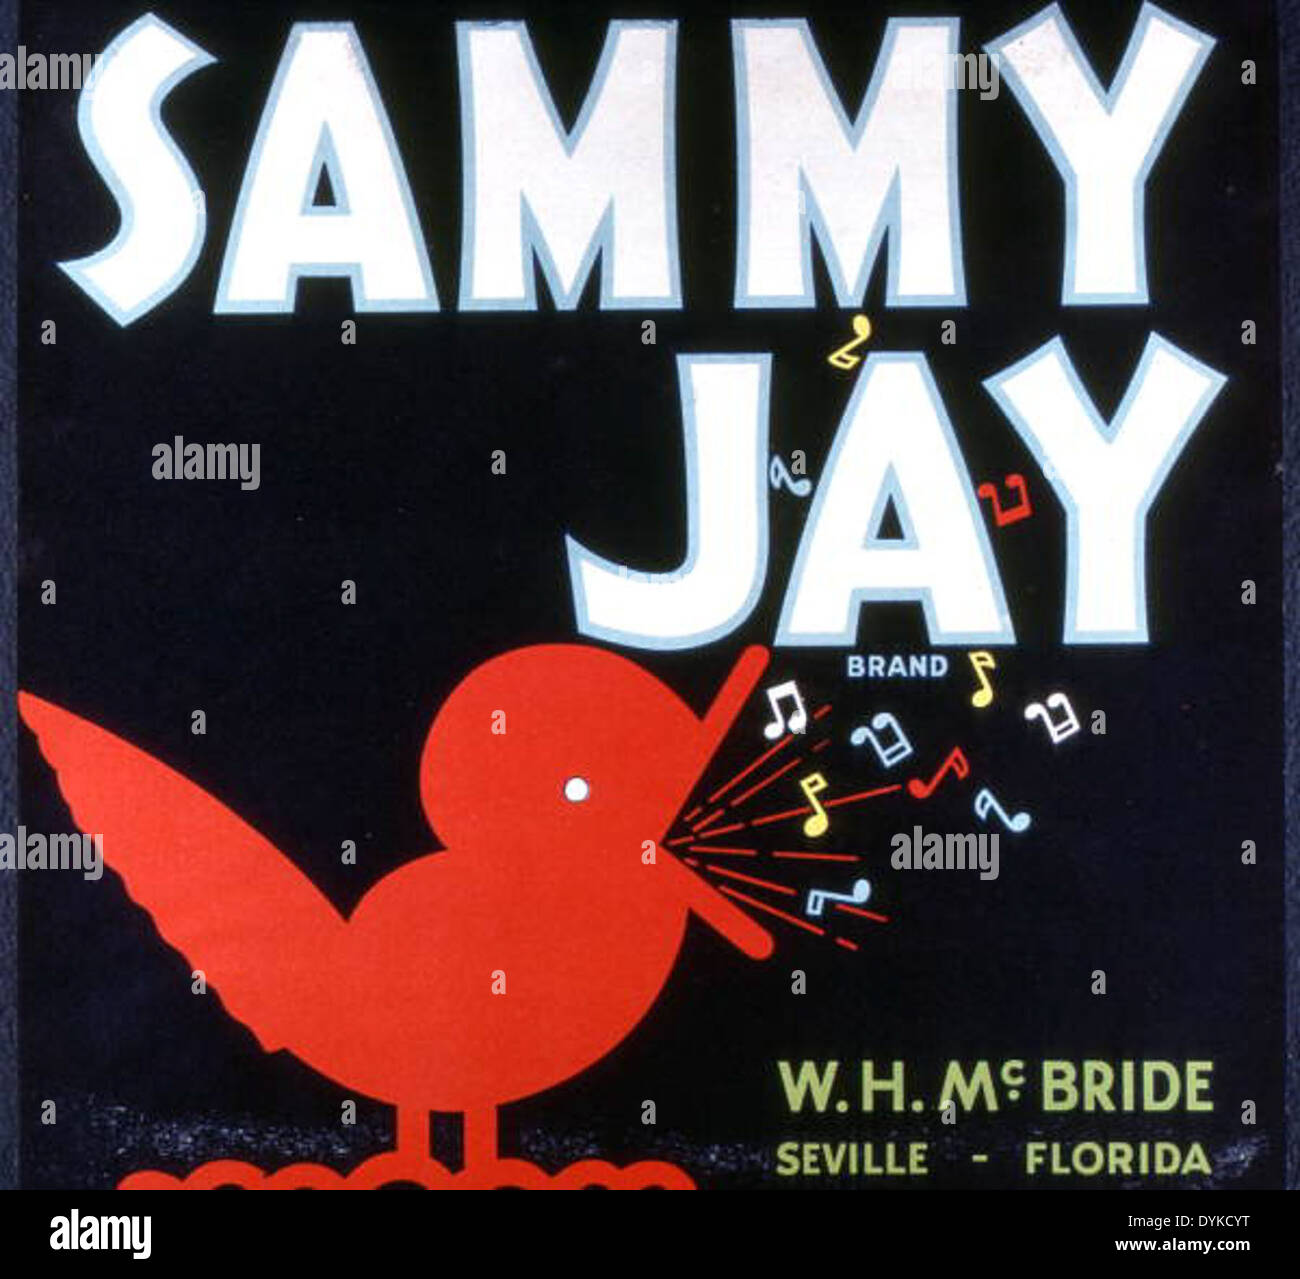 W.H. McBride's Sammy Jay Brand citrus label Stock Photo